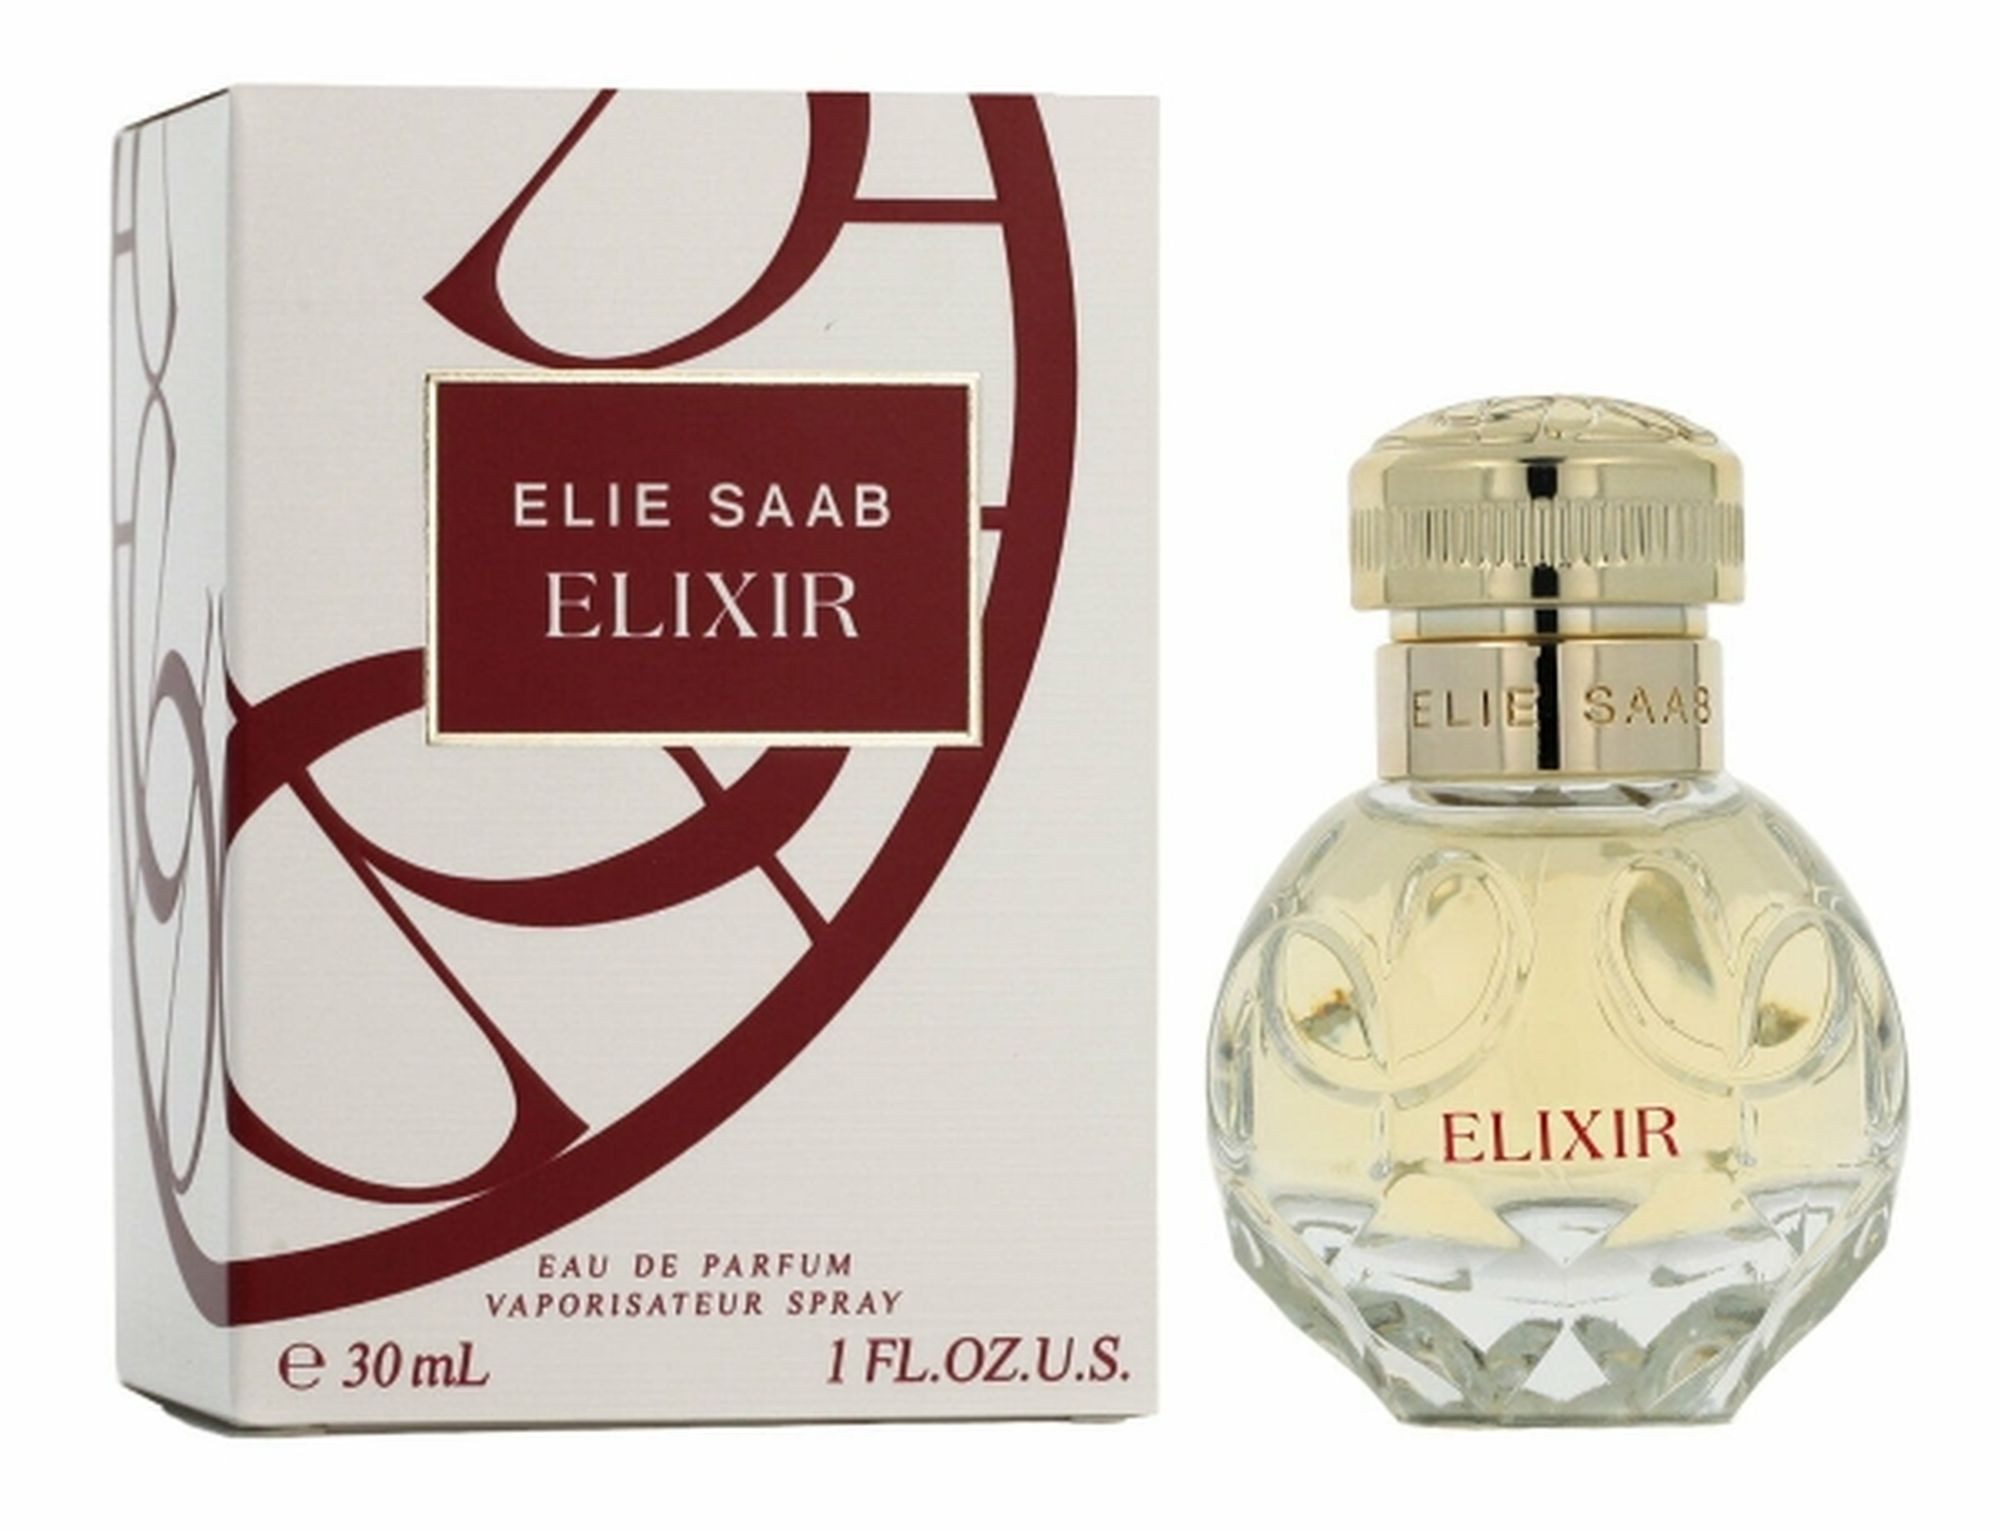 ELIE SAAB Eau de Parfum Elixir Damenparfum 30 ml